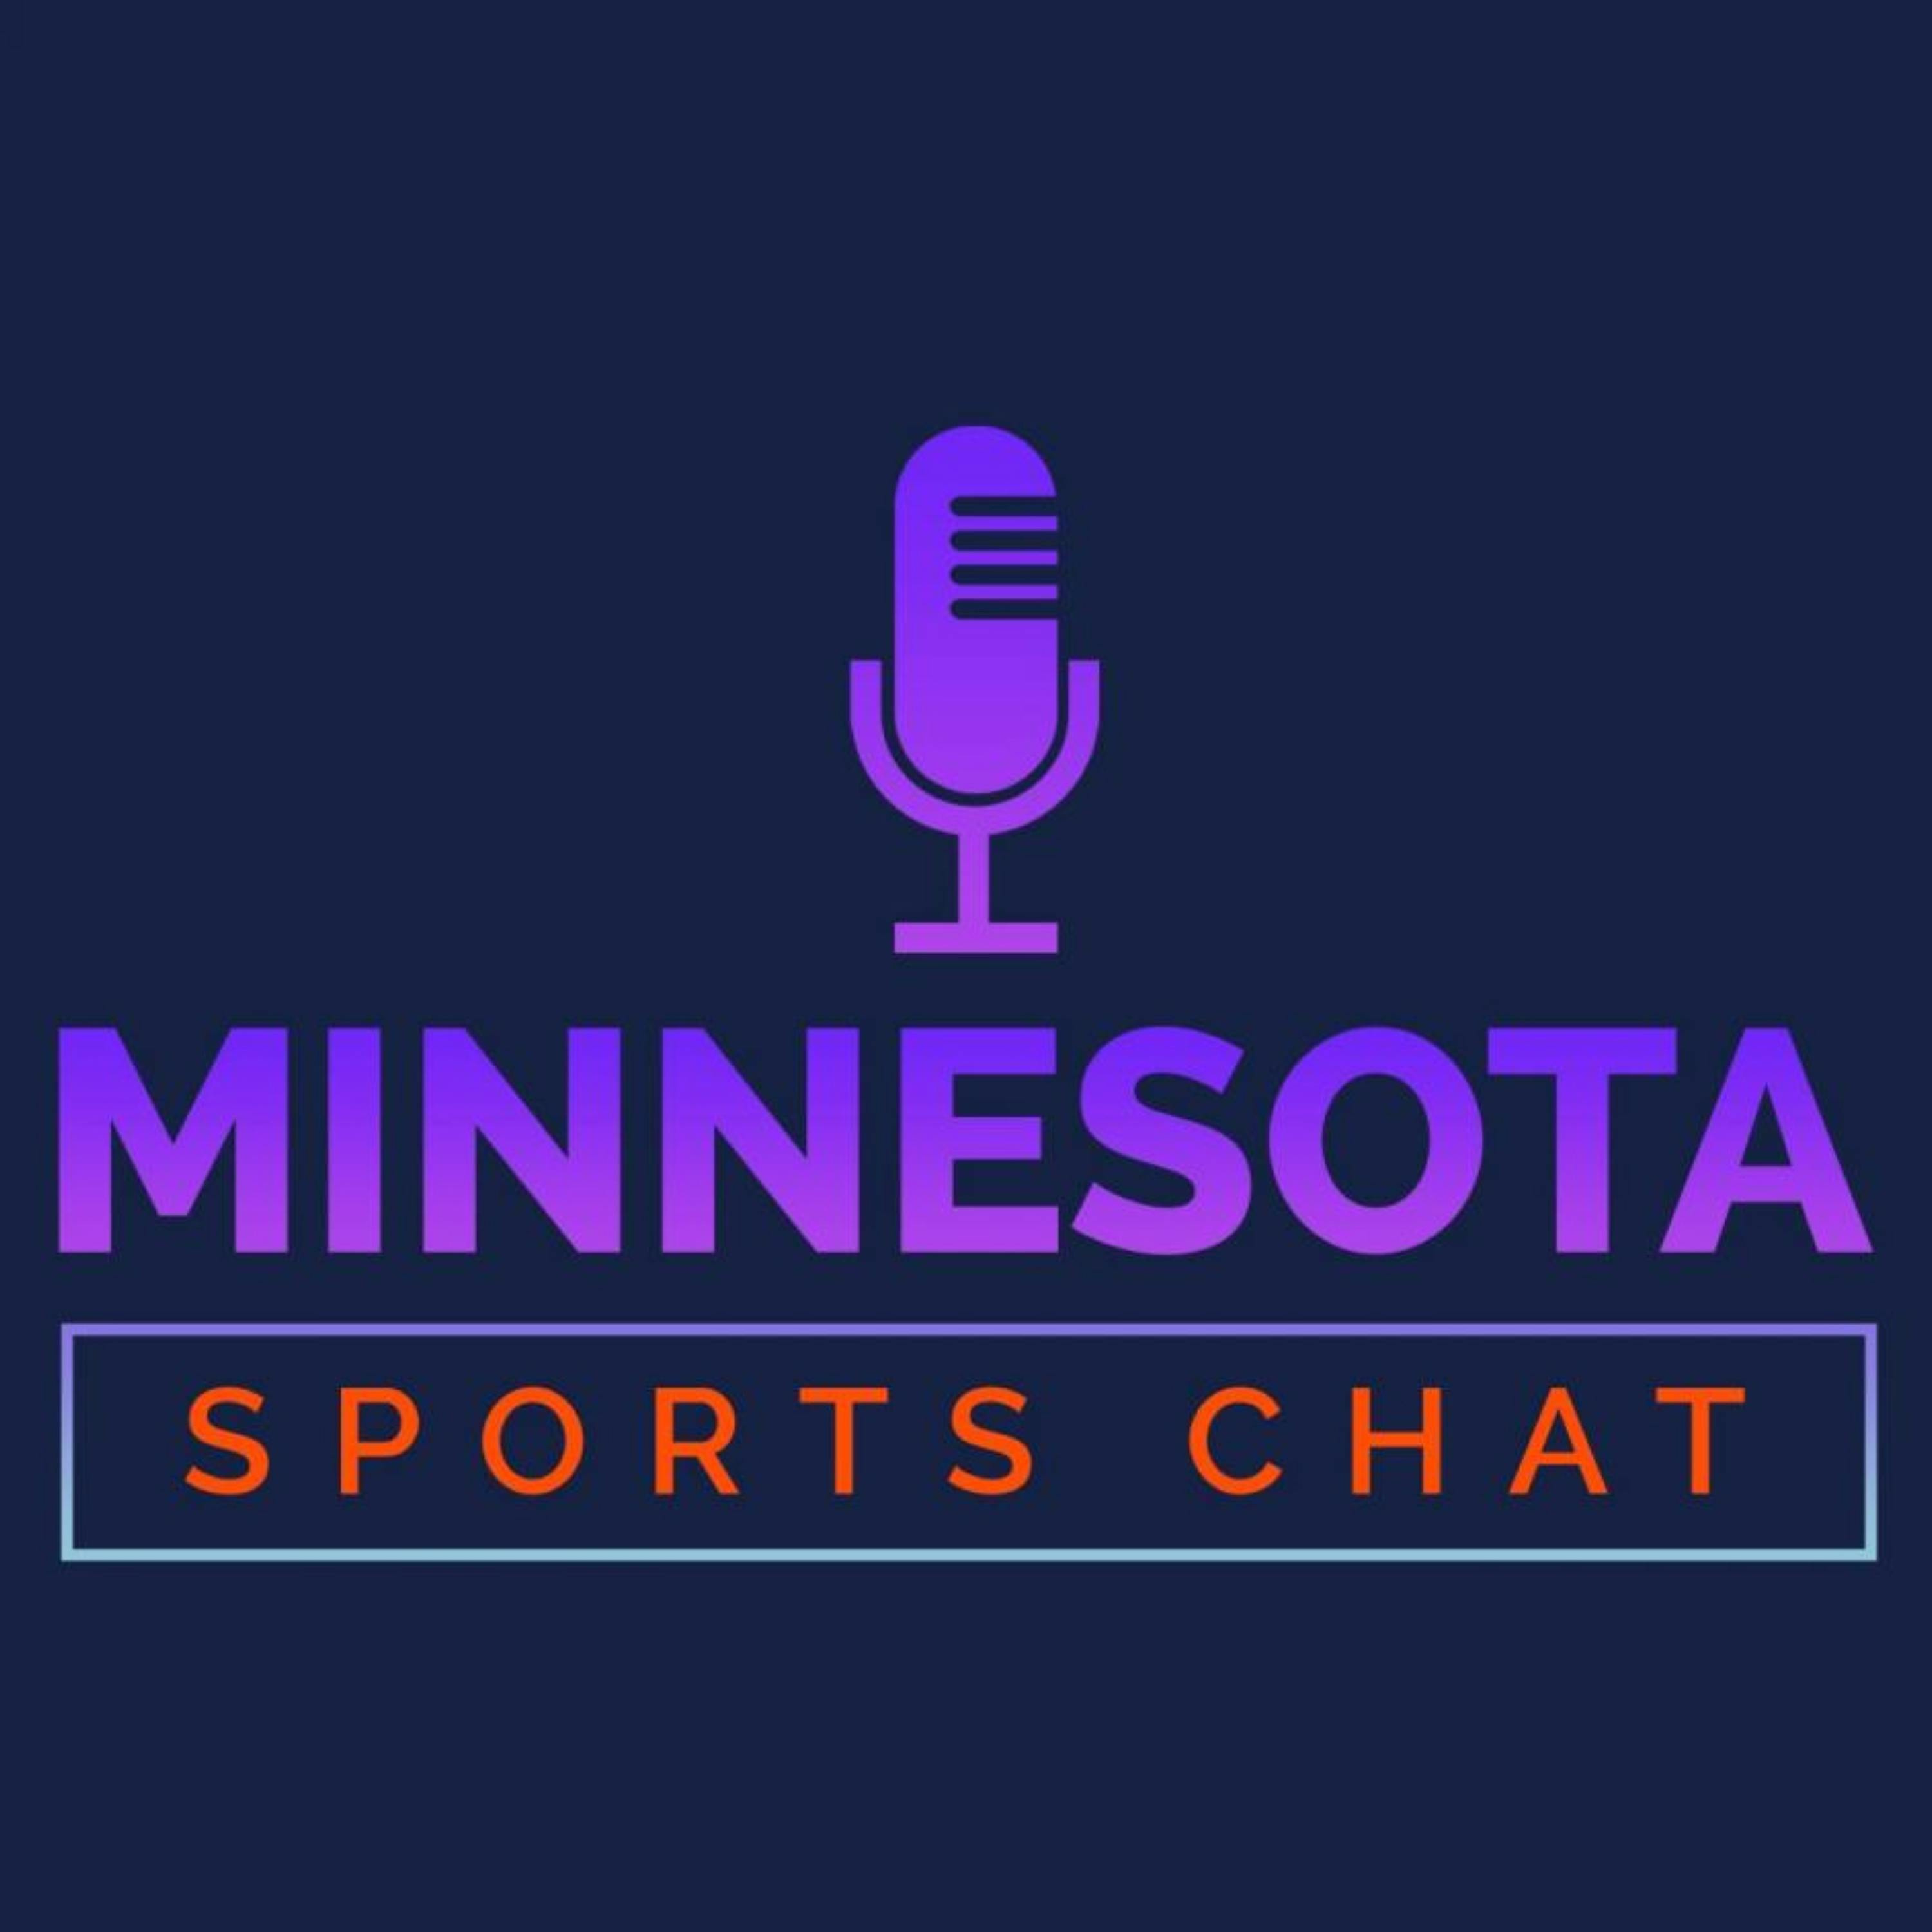 MINNESOTA SPORTS CHAT: Minnesota Twins Season Preview With Brandon Warne - Edition #160